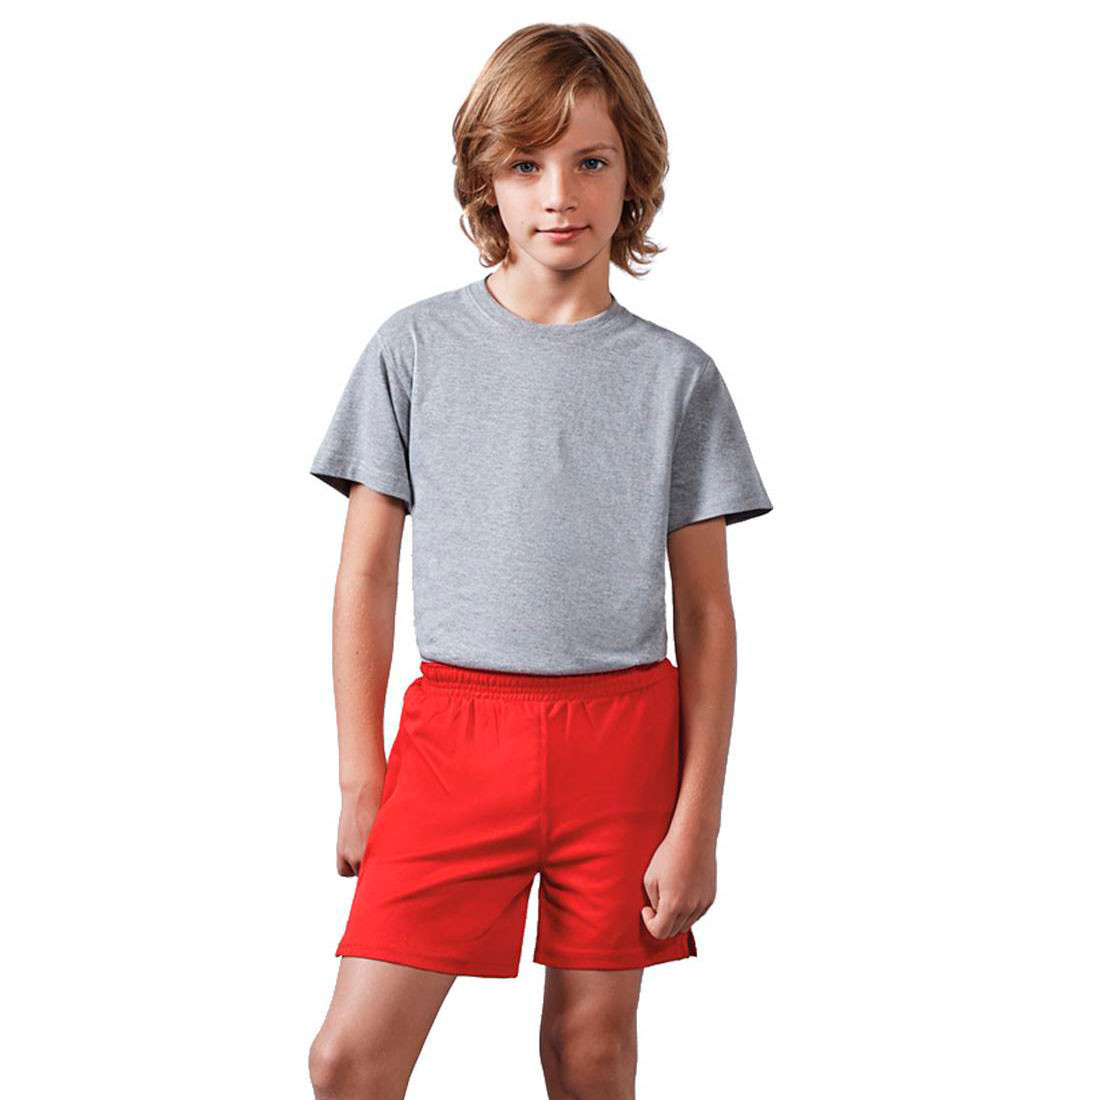 Pantalón deportivo infantil ROLY Calcio, compra online